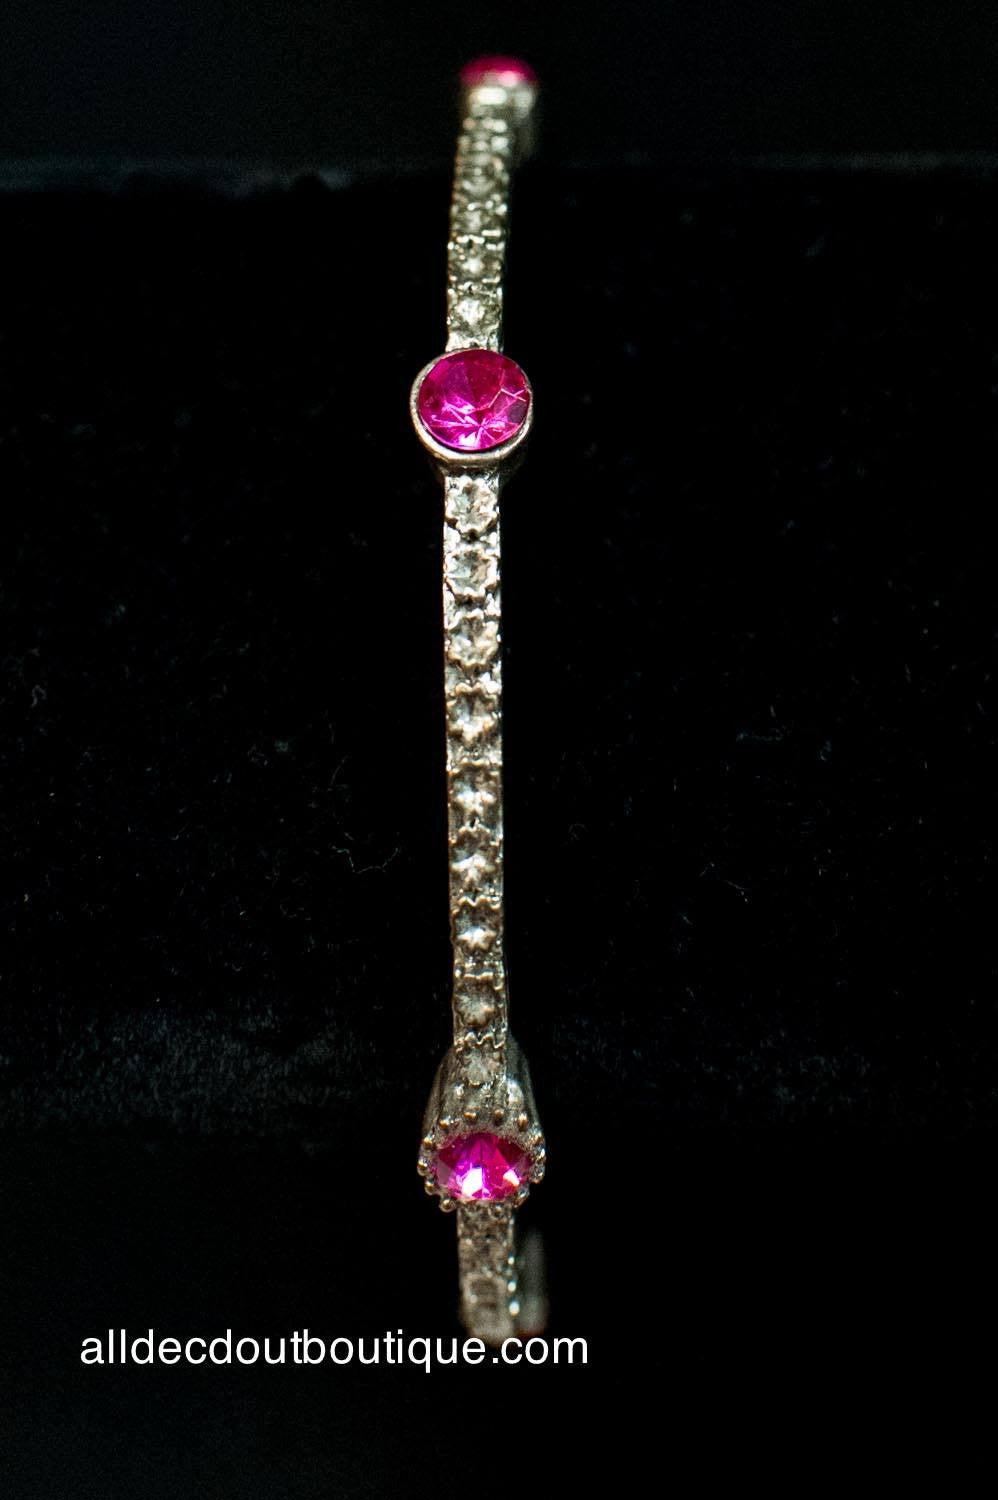 ADO | Silver Metal Bracelet With Pink Stones